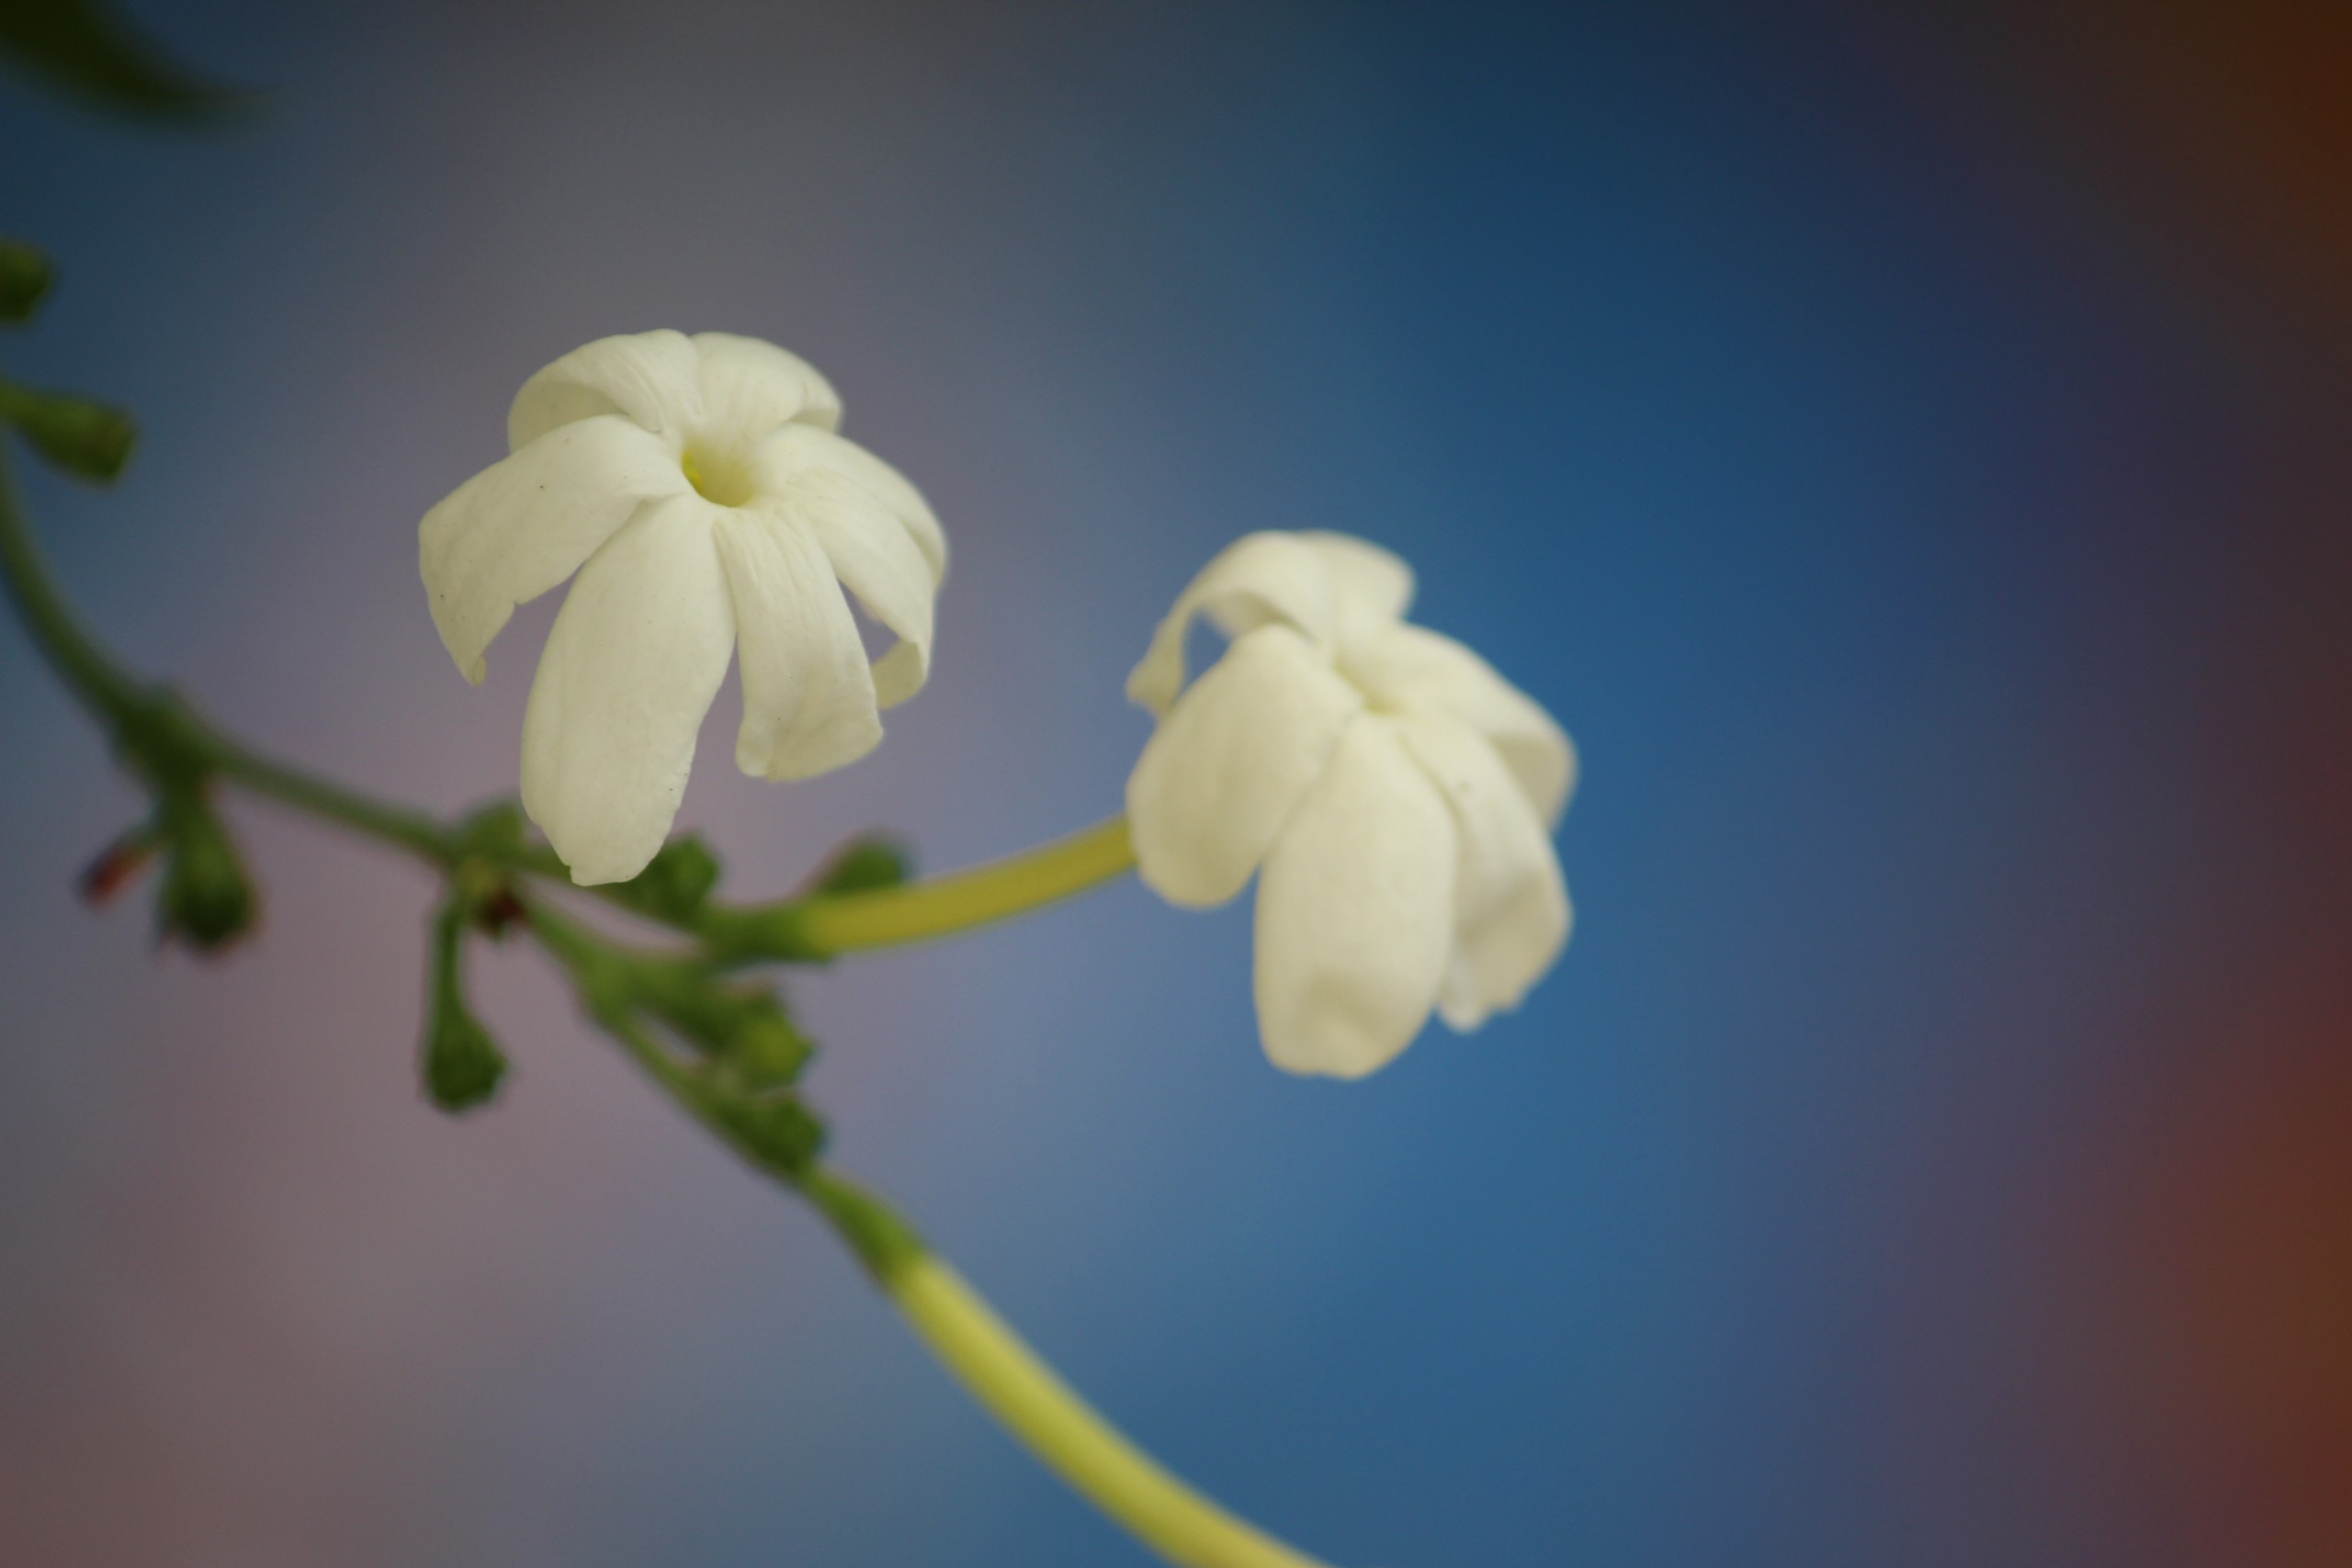 Pair of White Flowers